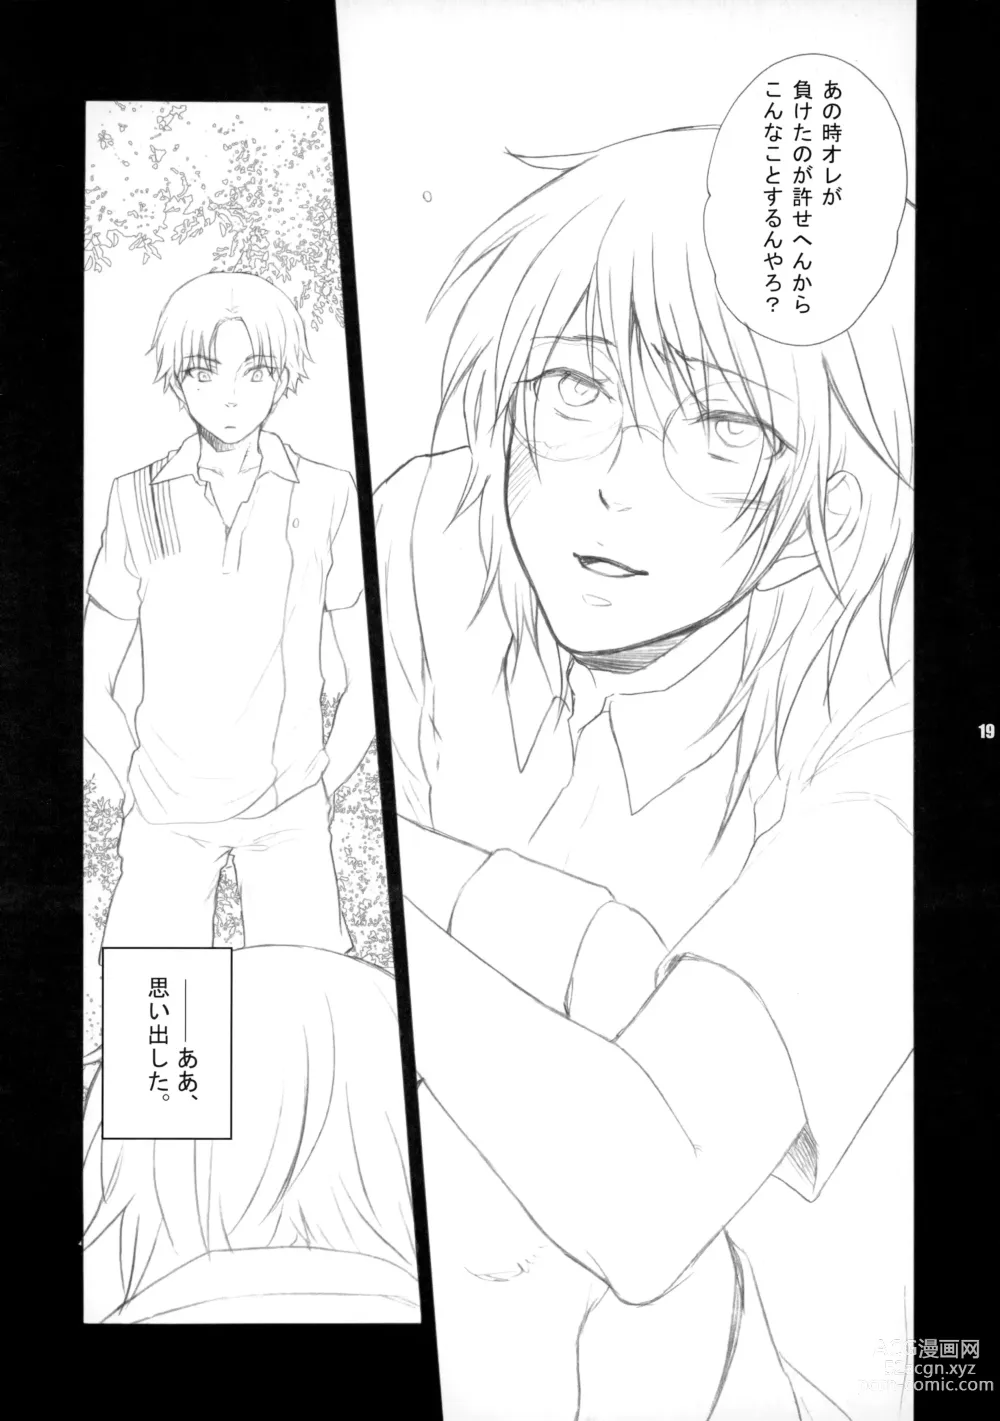 Page 18 of doujinshi 幻視画少年